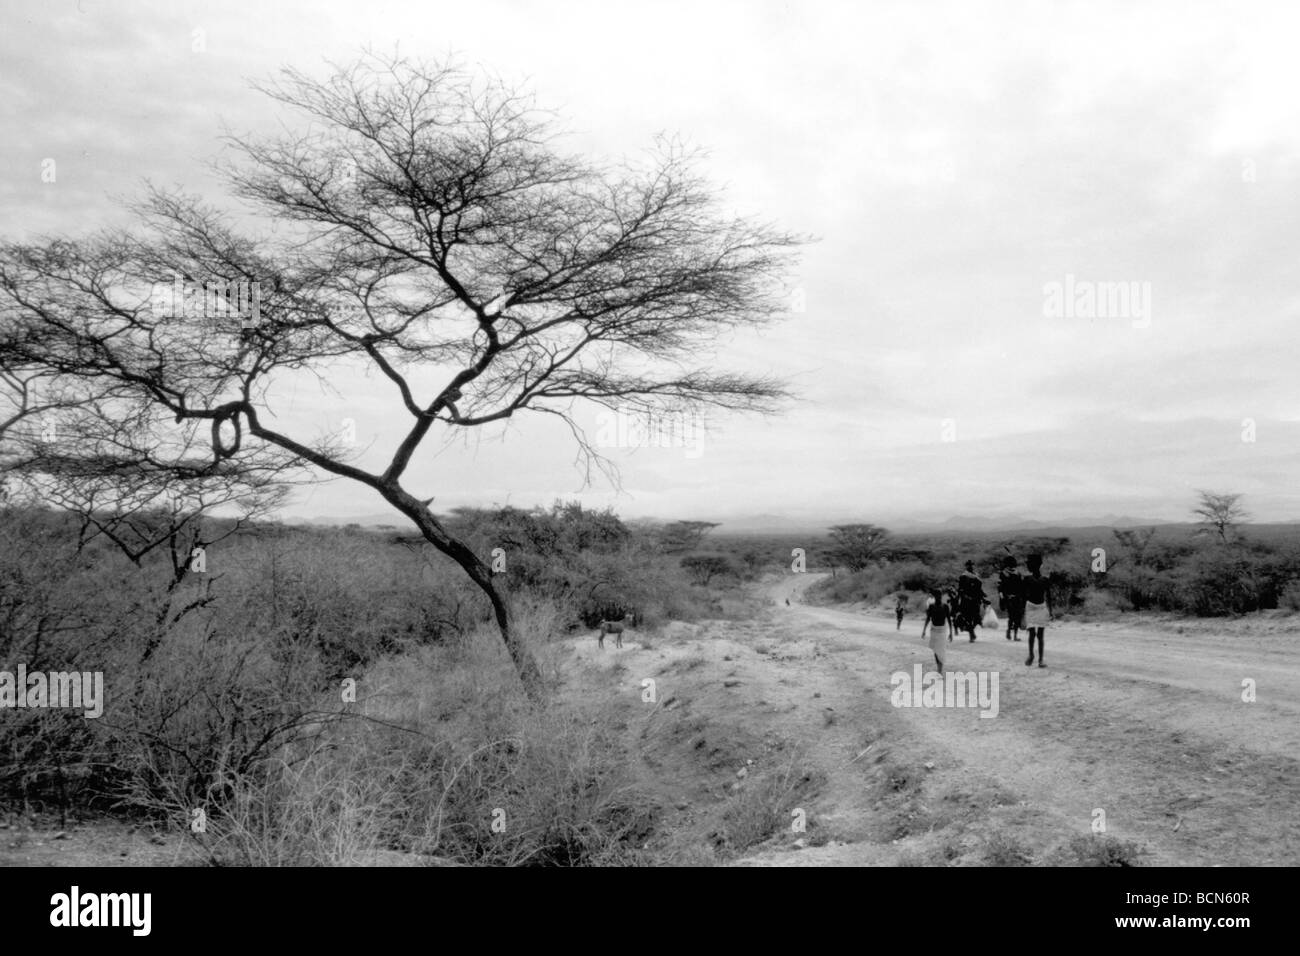 Arba minch Black and White Stock Photos & Images - Alamy